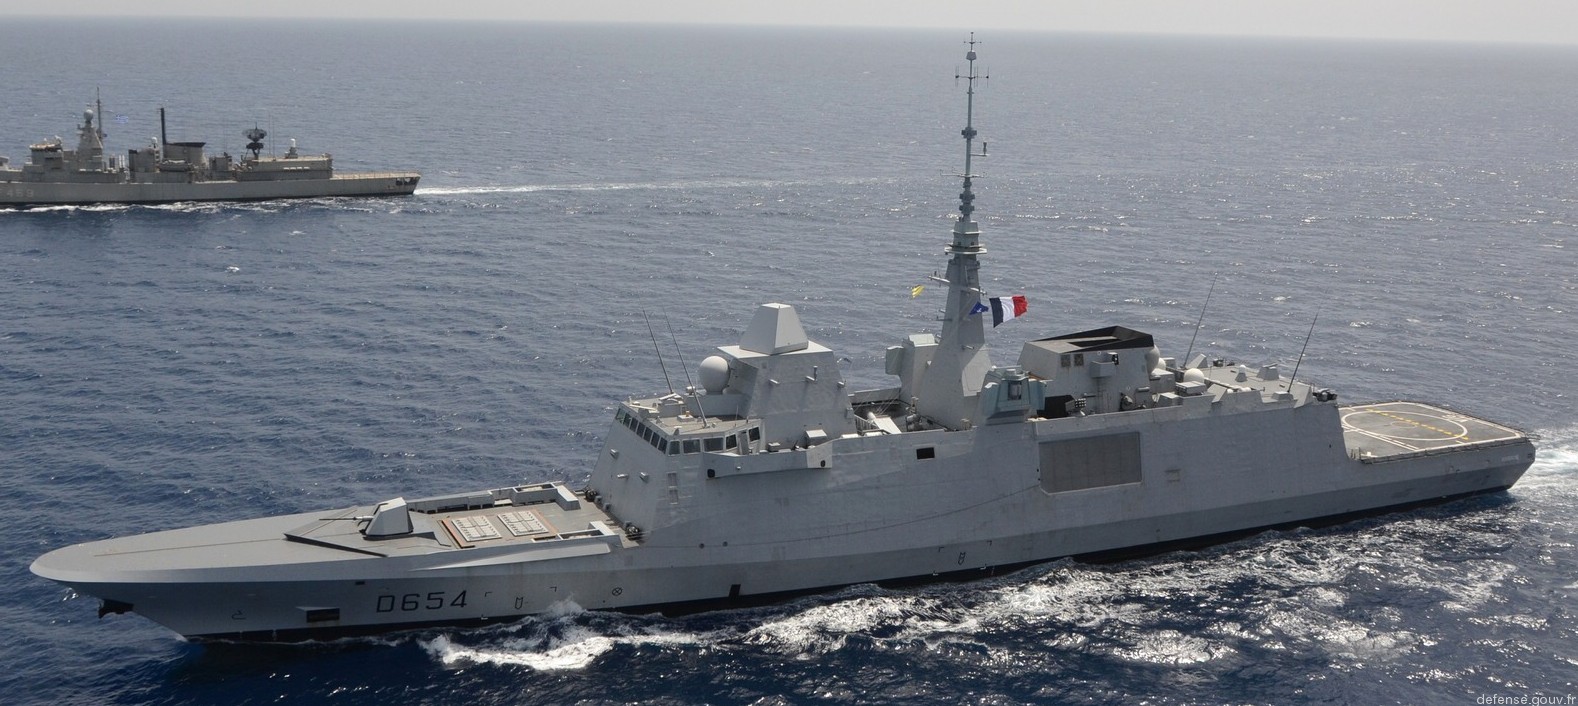 d-654 fs auvergne fremm aquitaine class frigate fregate multi purpose french navy marine nationale 19